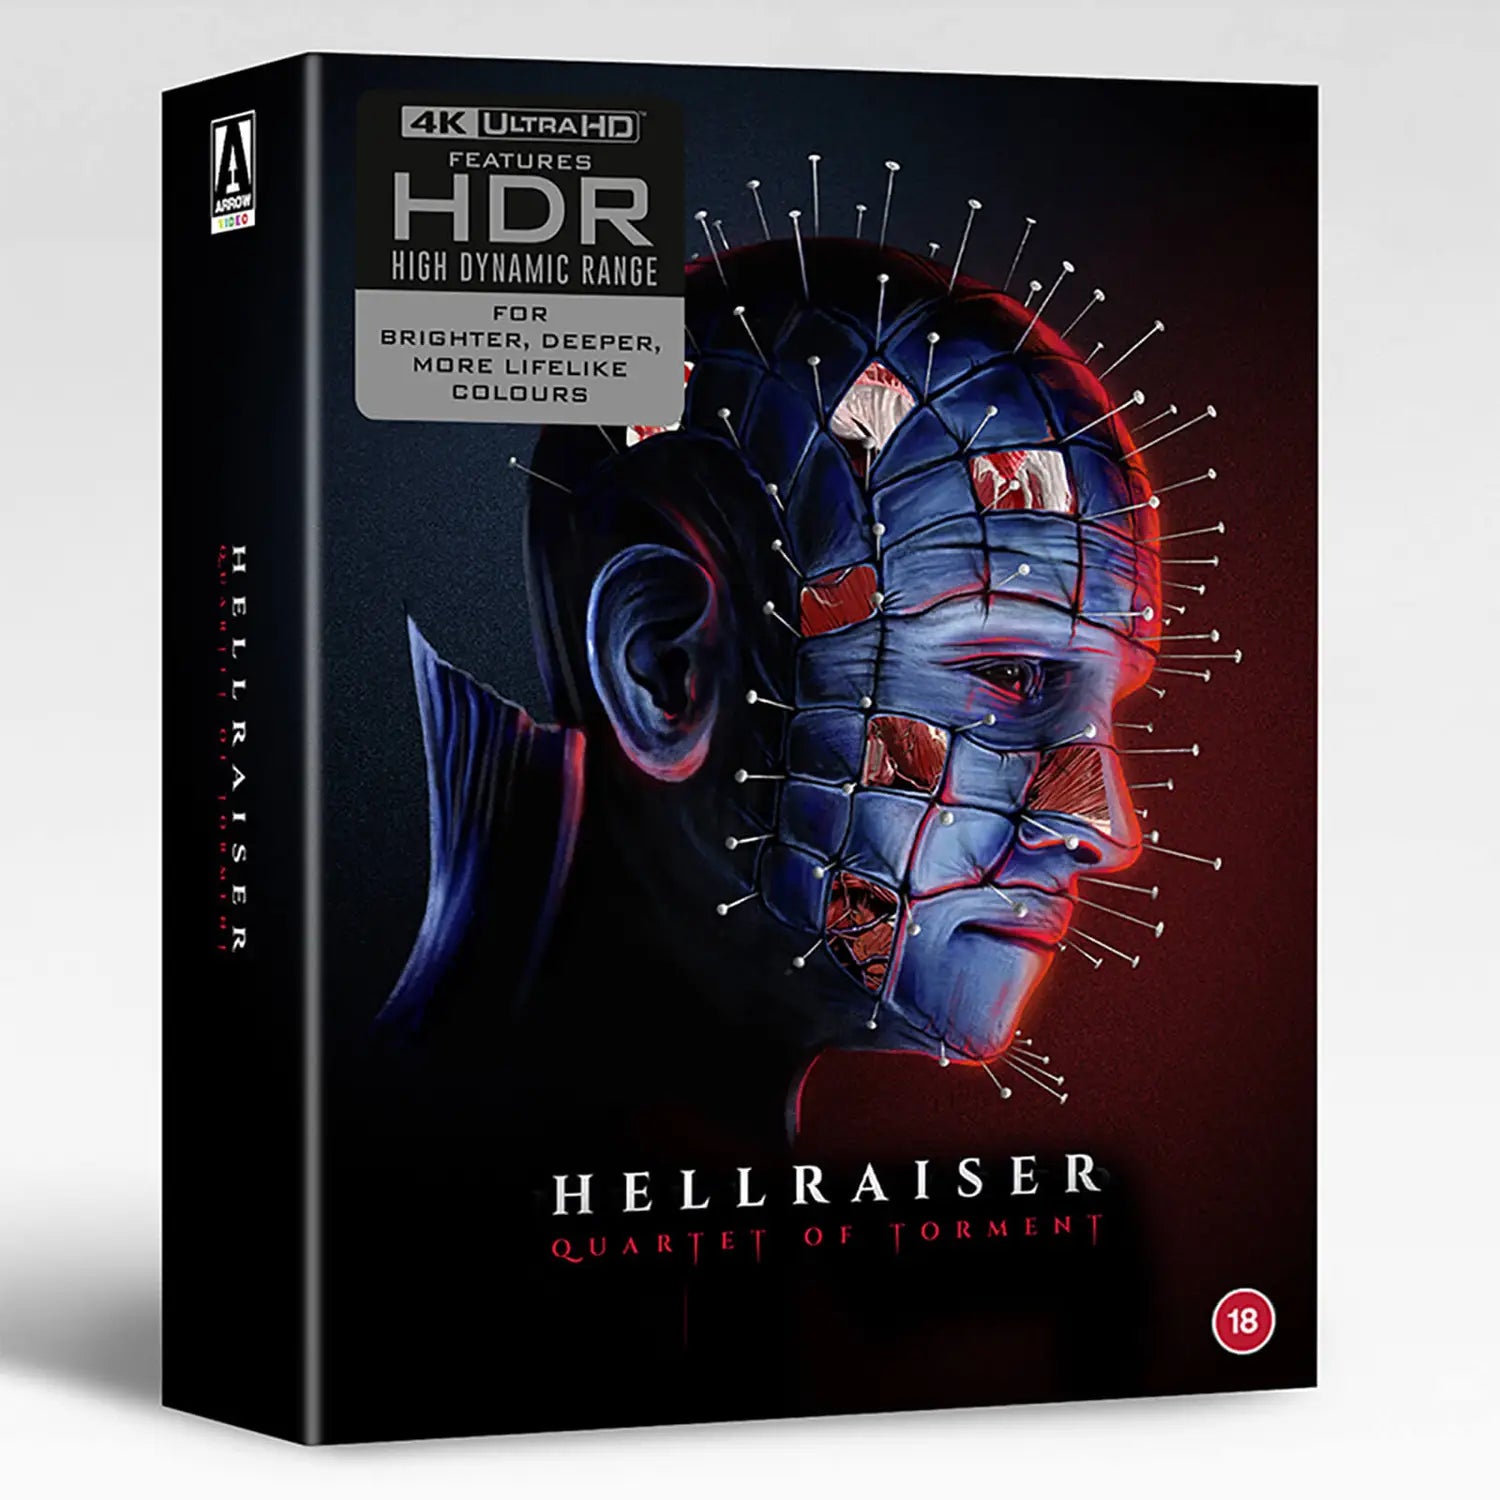 Hellraiser Quartet Torment 4k box set.